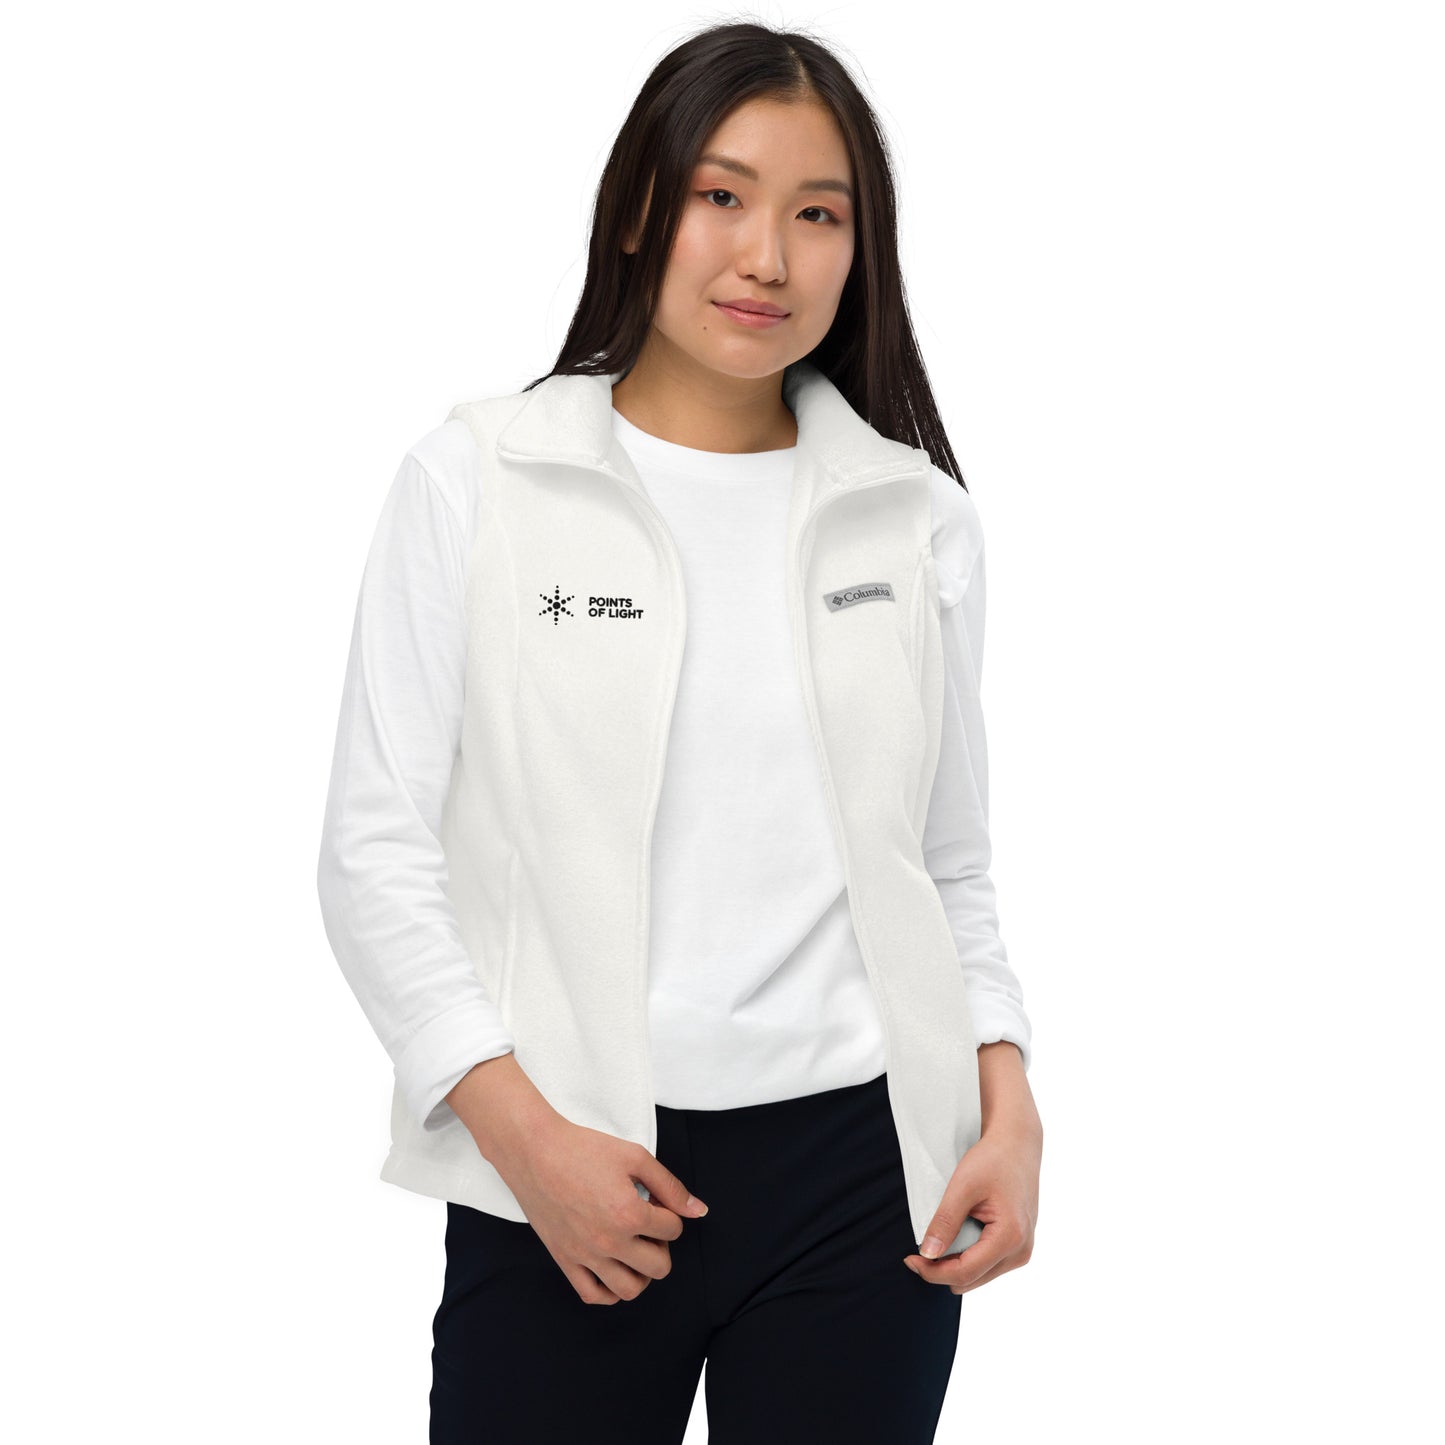 Points of Light Women’s Columbia fleece vest (White)